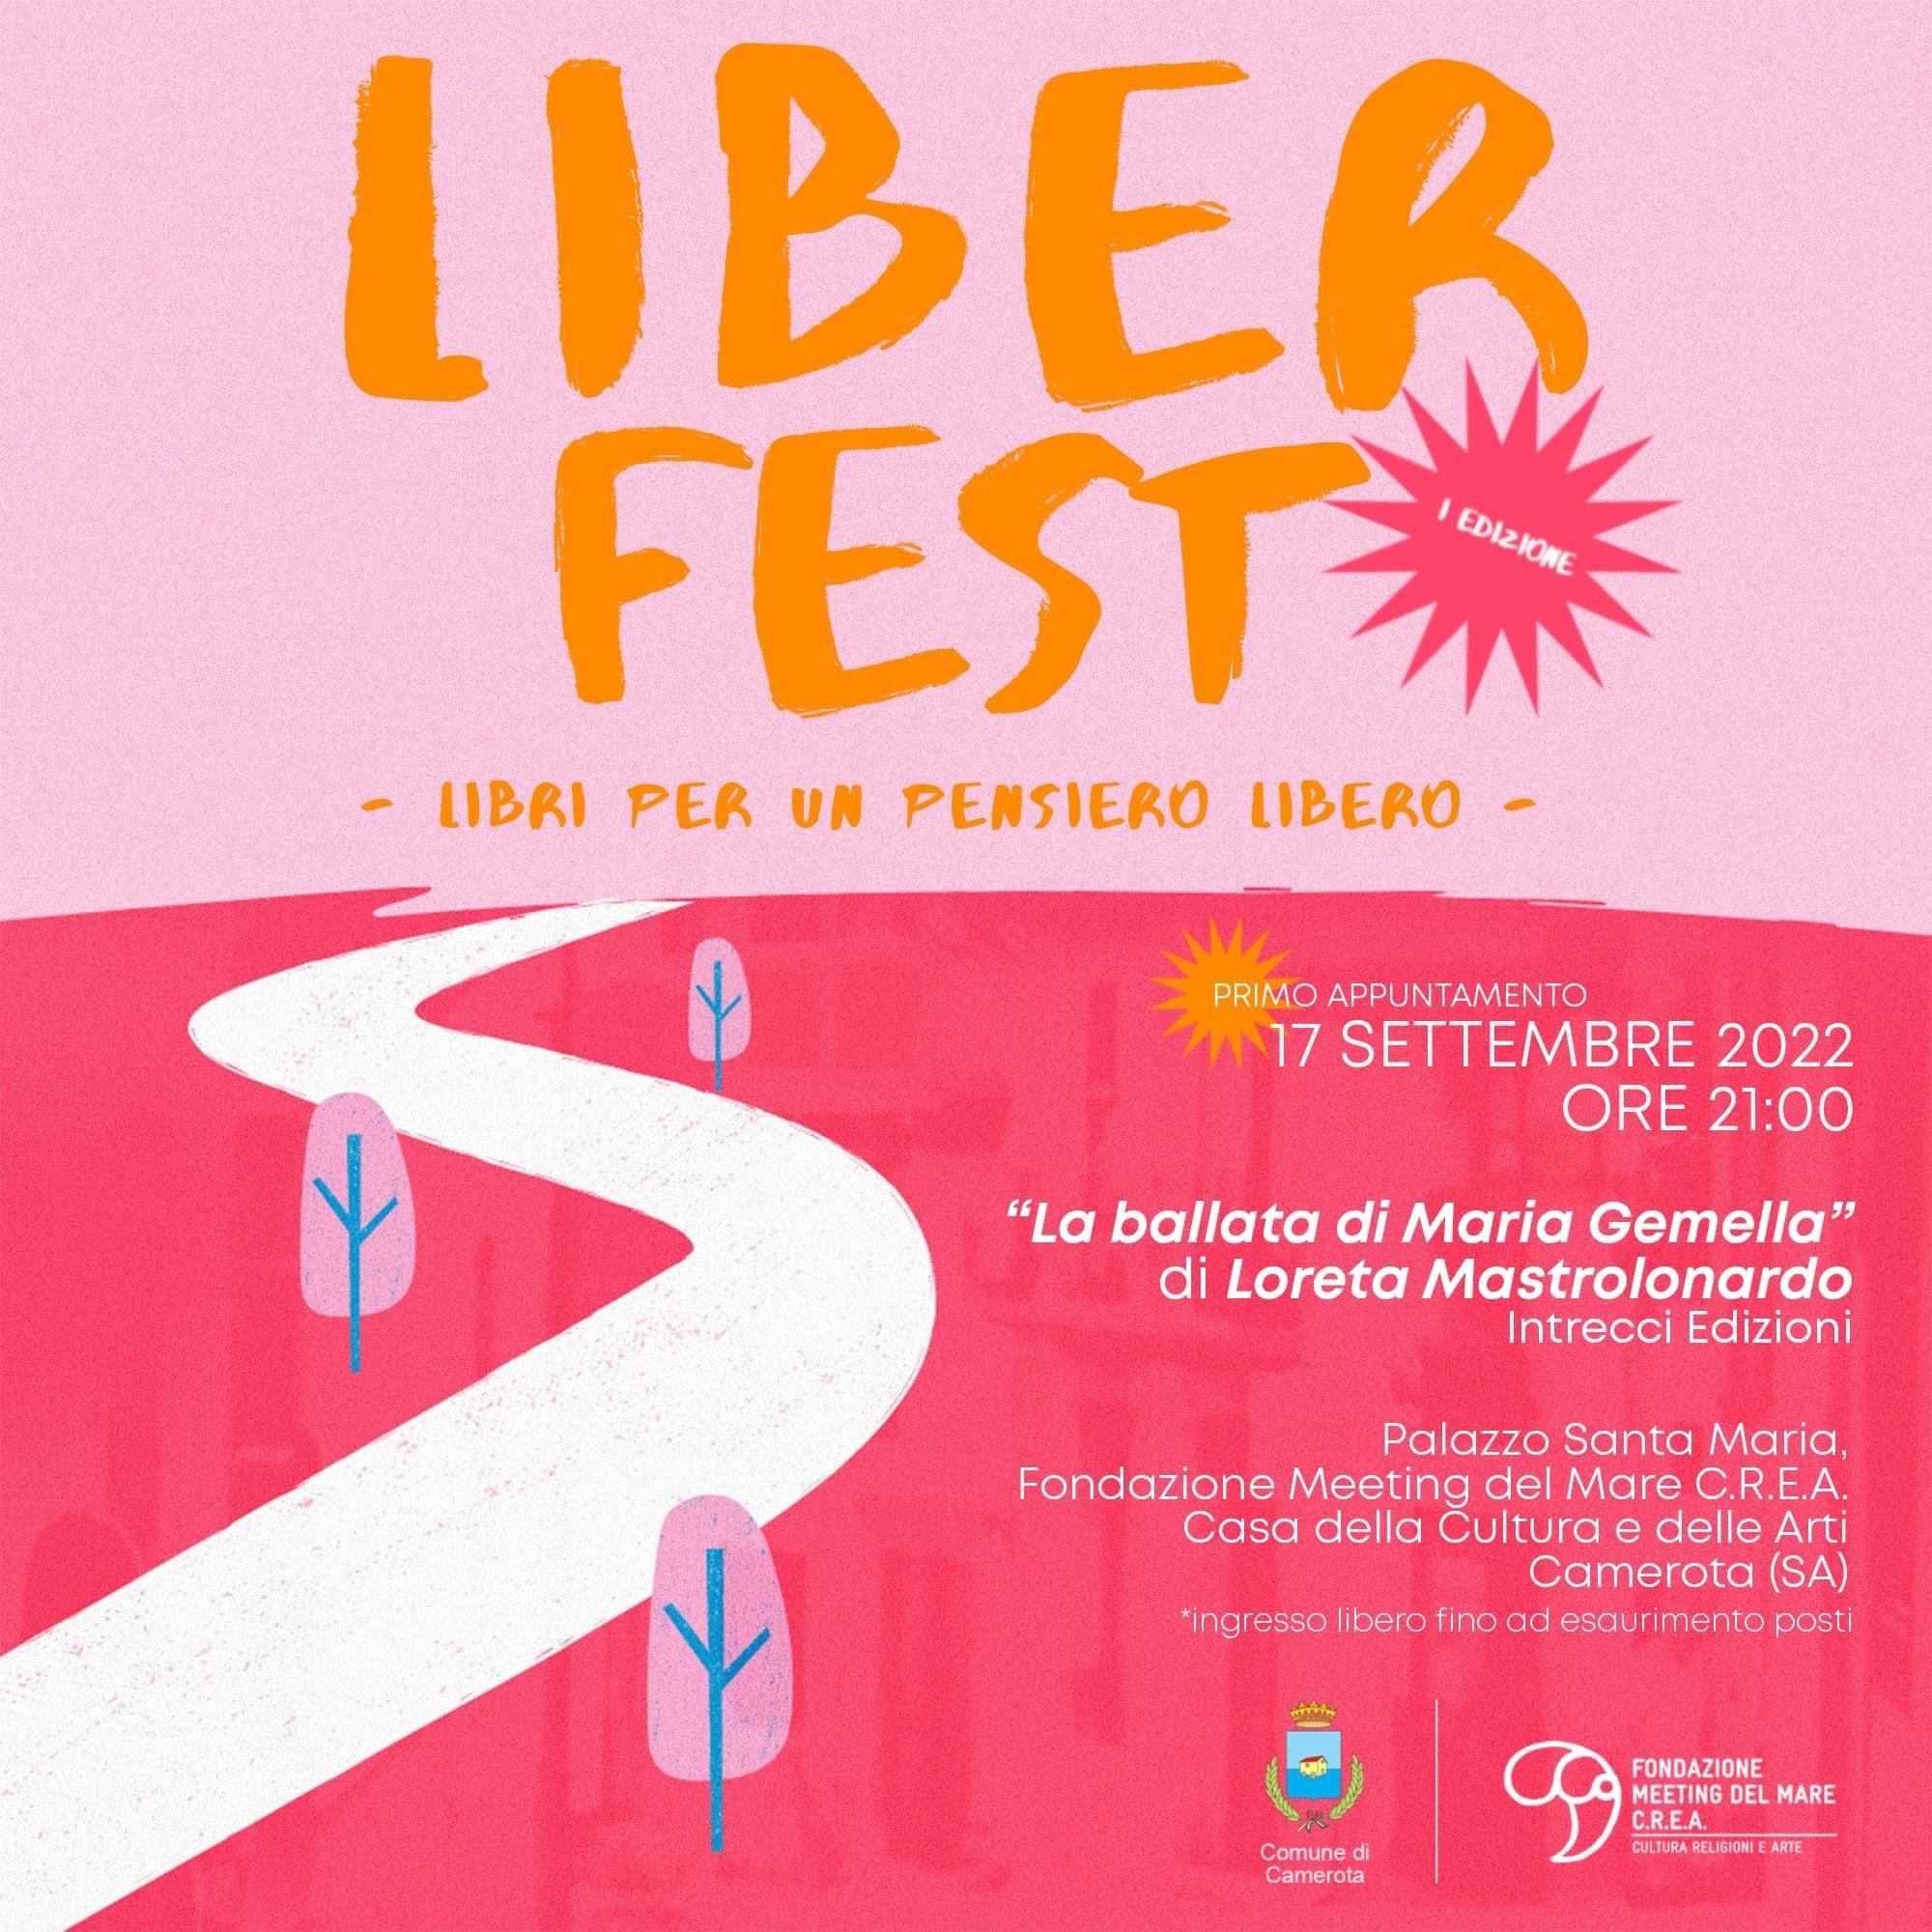 Liber Fest a Camerota: «Libri per un pensiero libero»